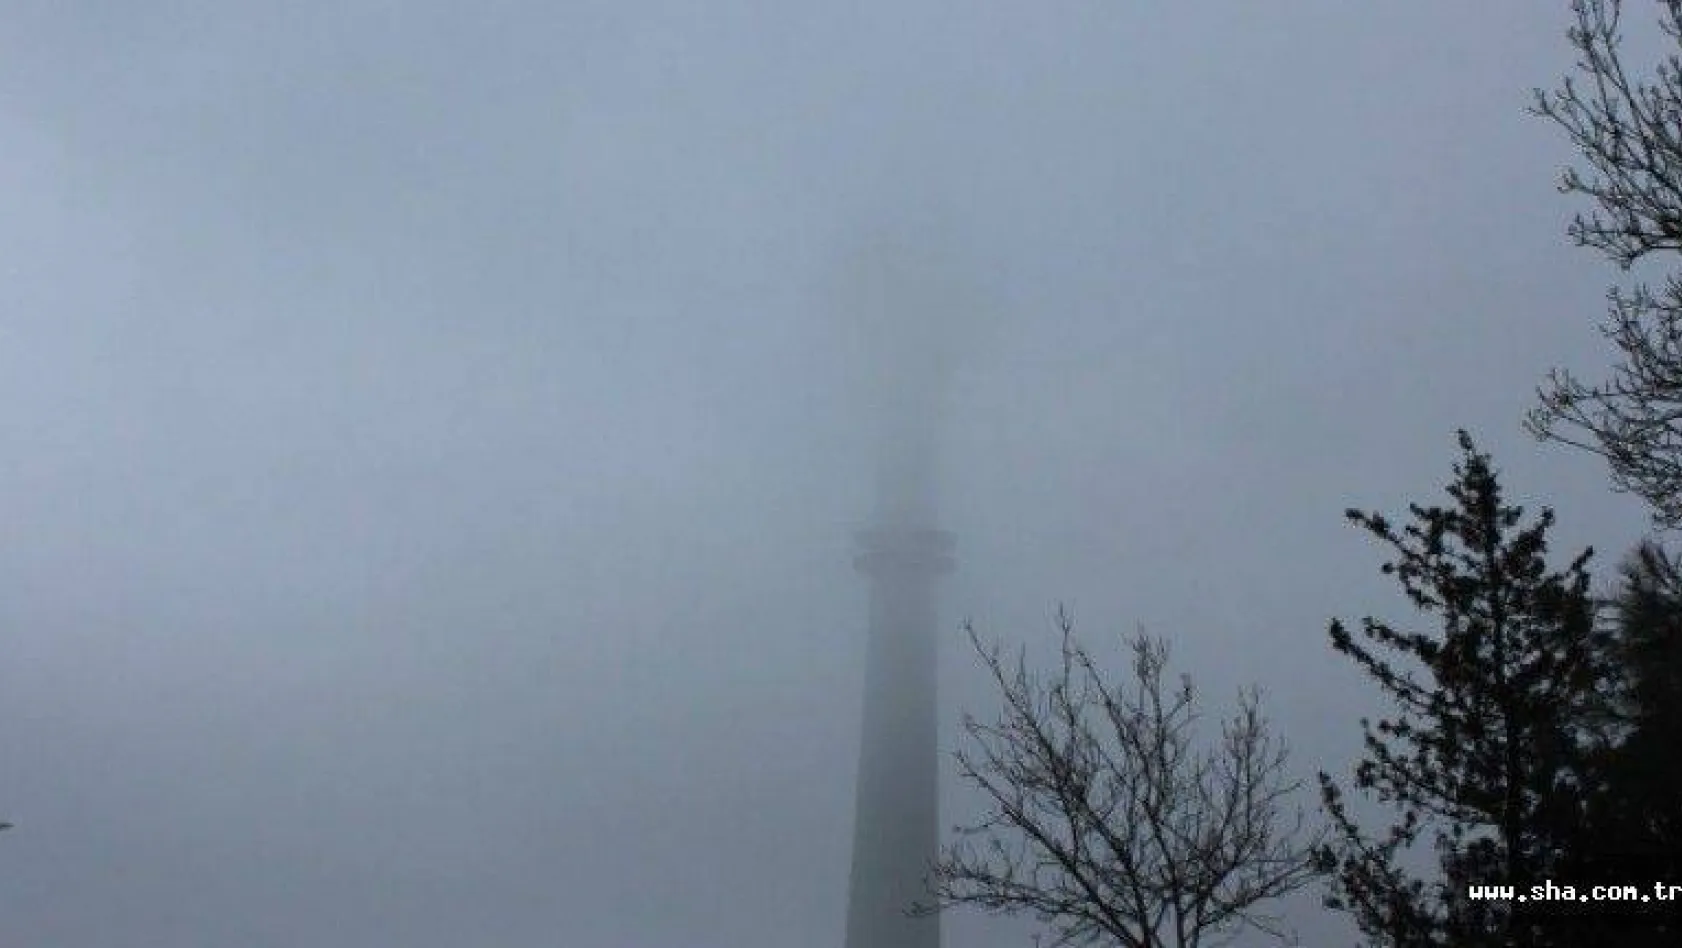 163 metrelik televizyon kulesi siste kayboldu